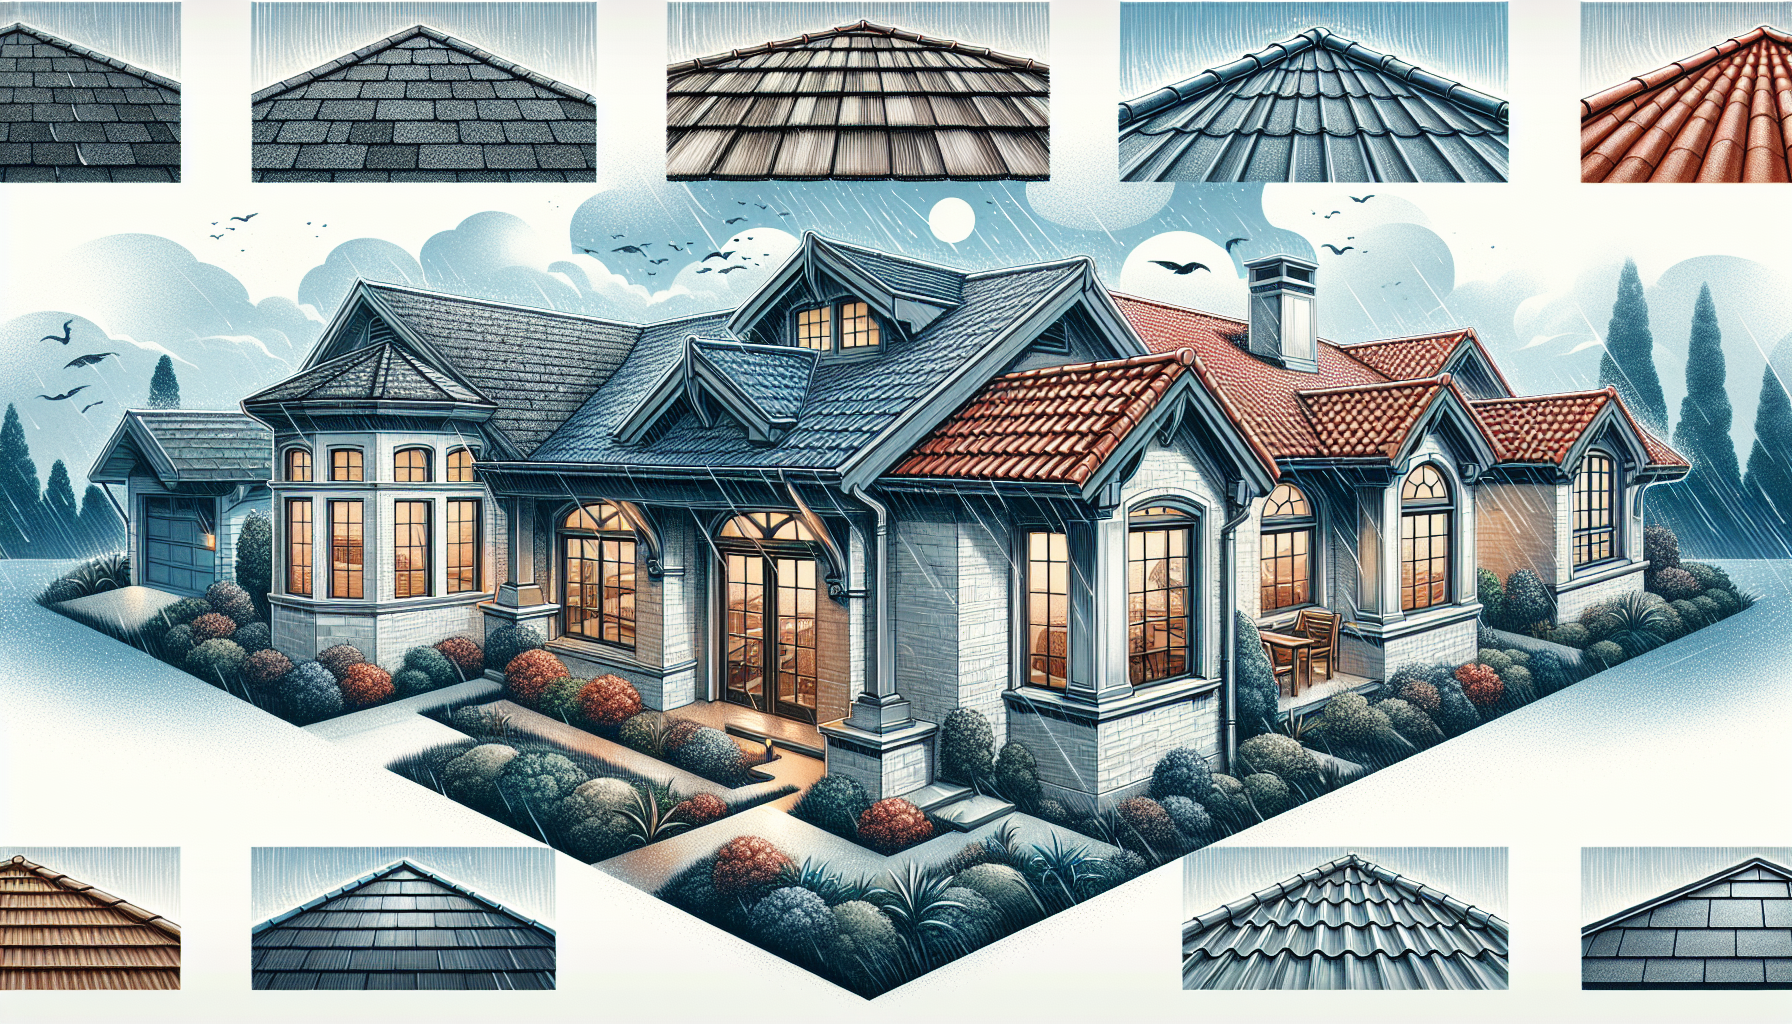 Illustration of popular residential roofing materials